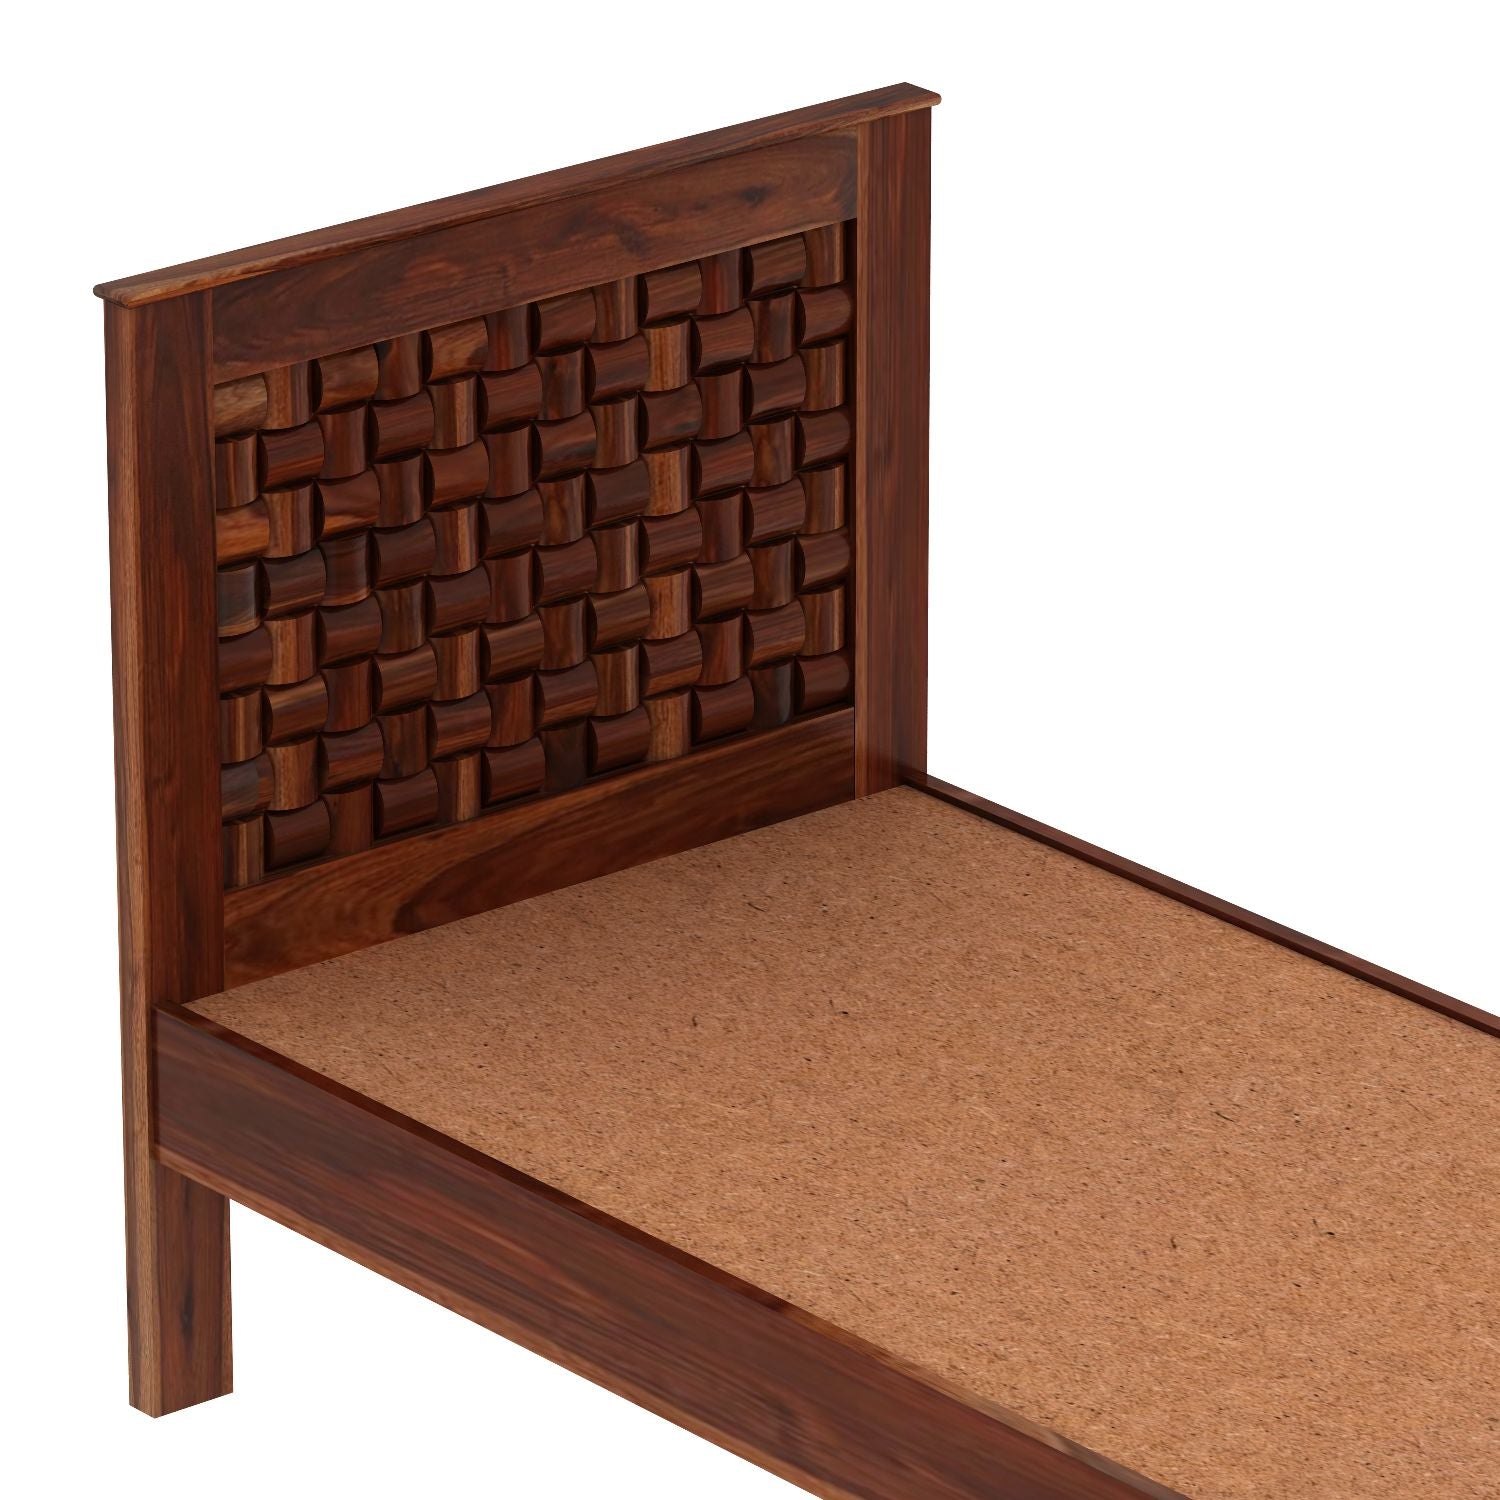 Olivia Solid Sheesham Wood Single Bed Without Storage (Natural Finish)